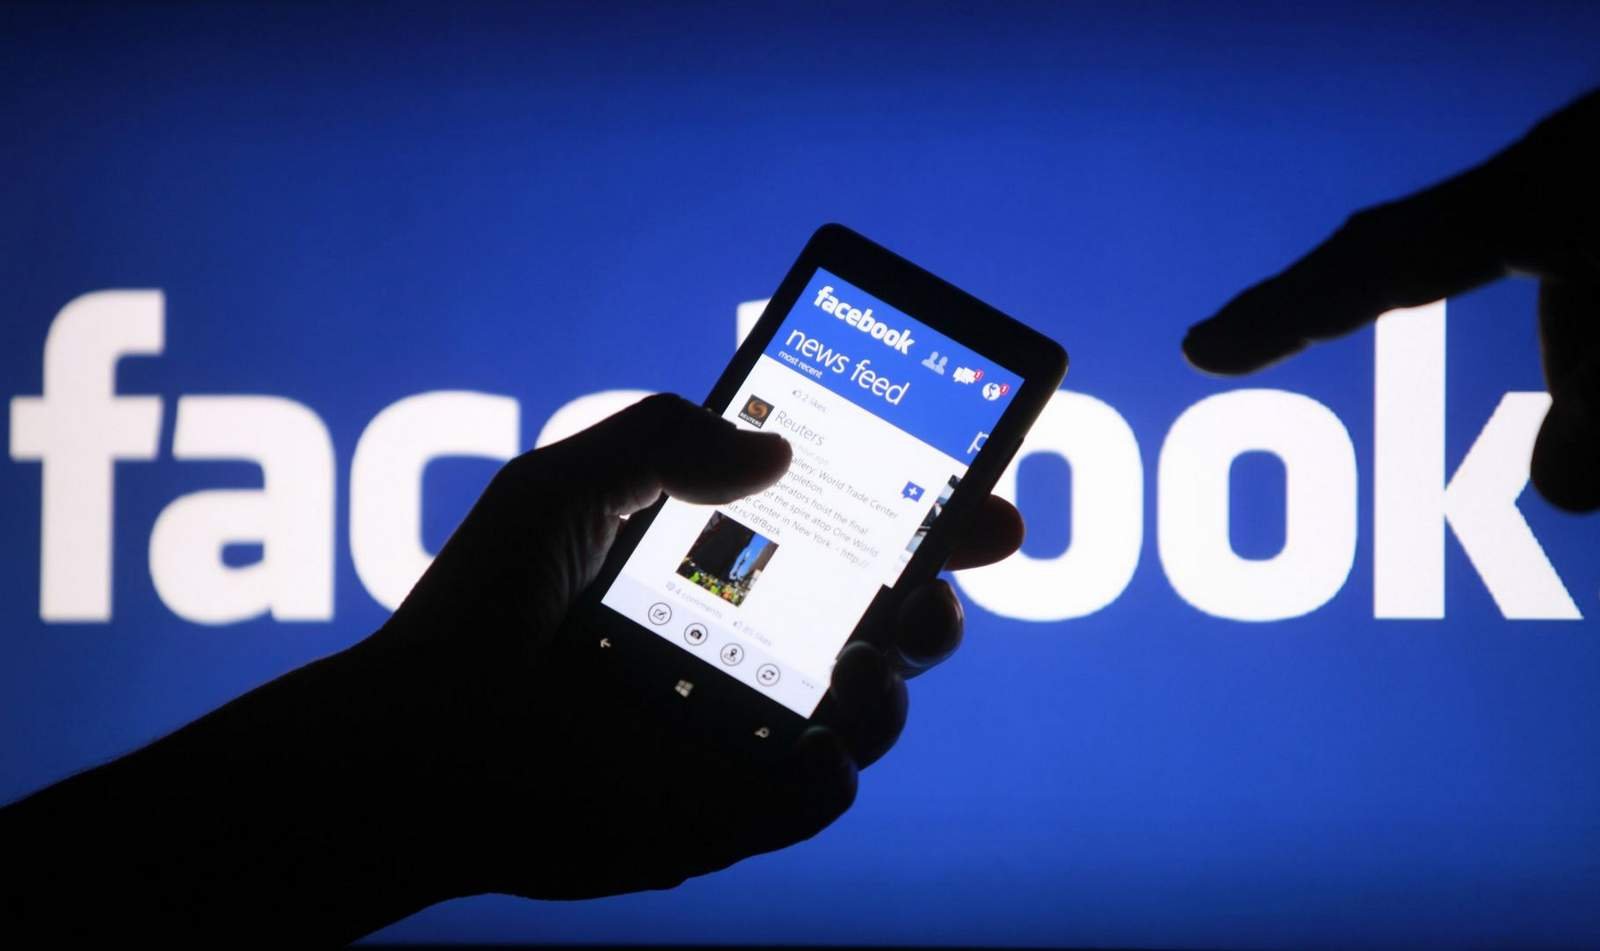 facebook-142-million-users-india-largest-market-outside-u-s